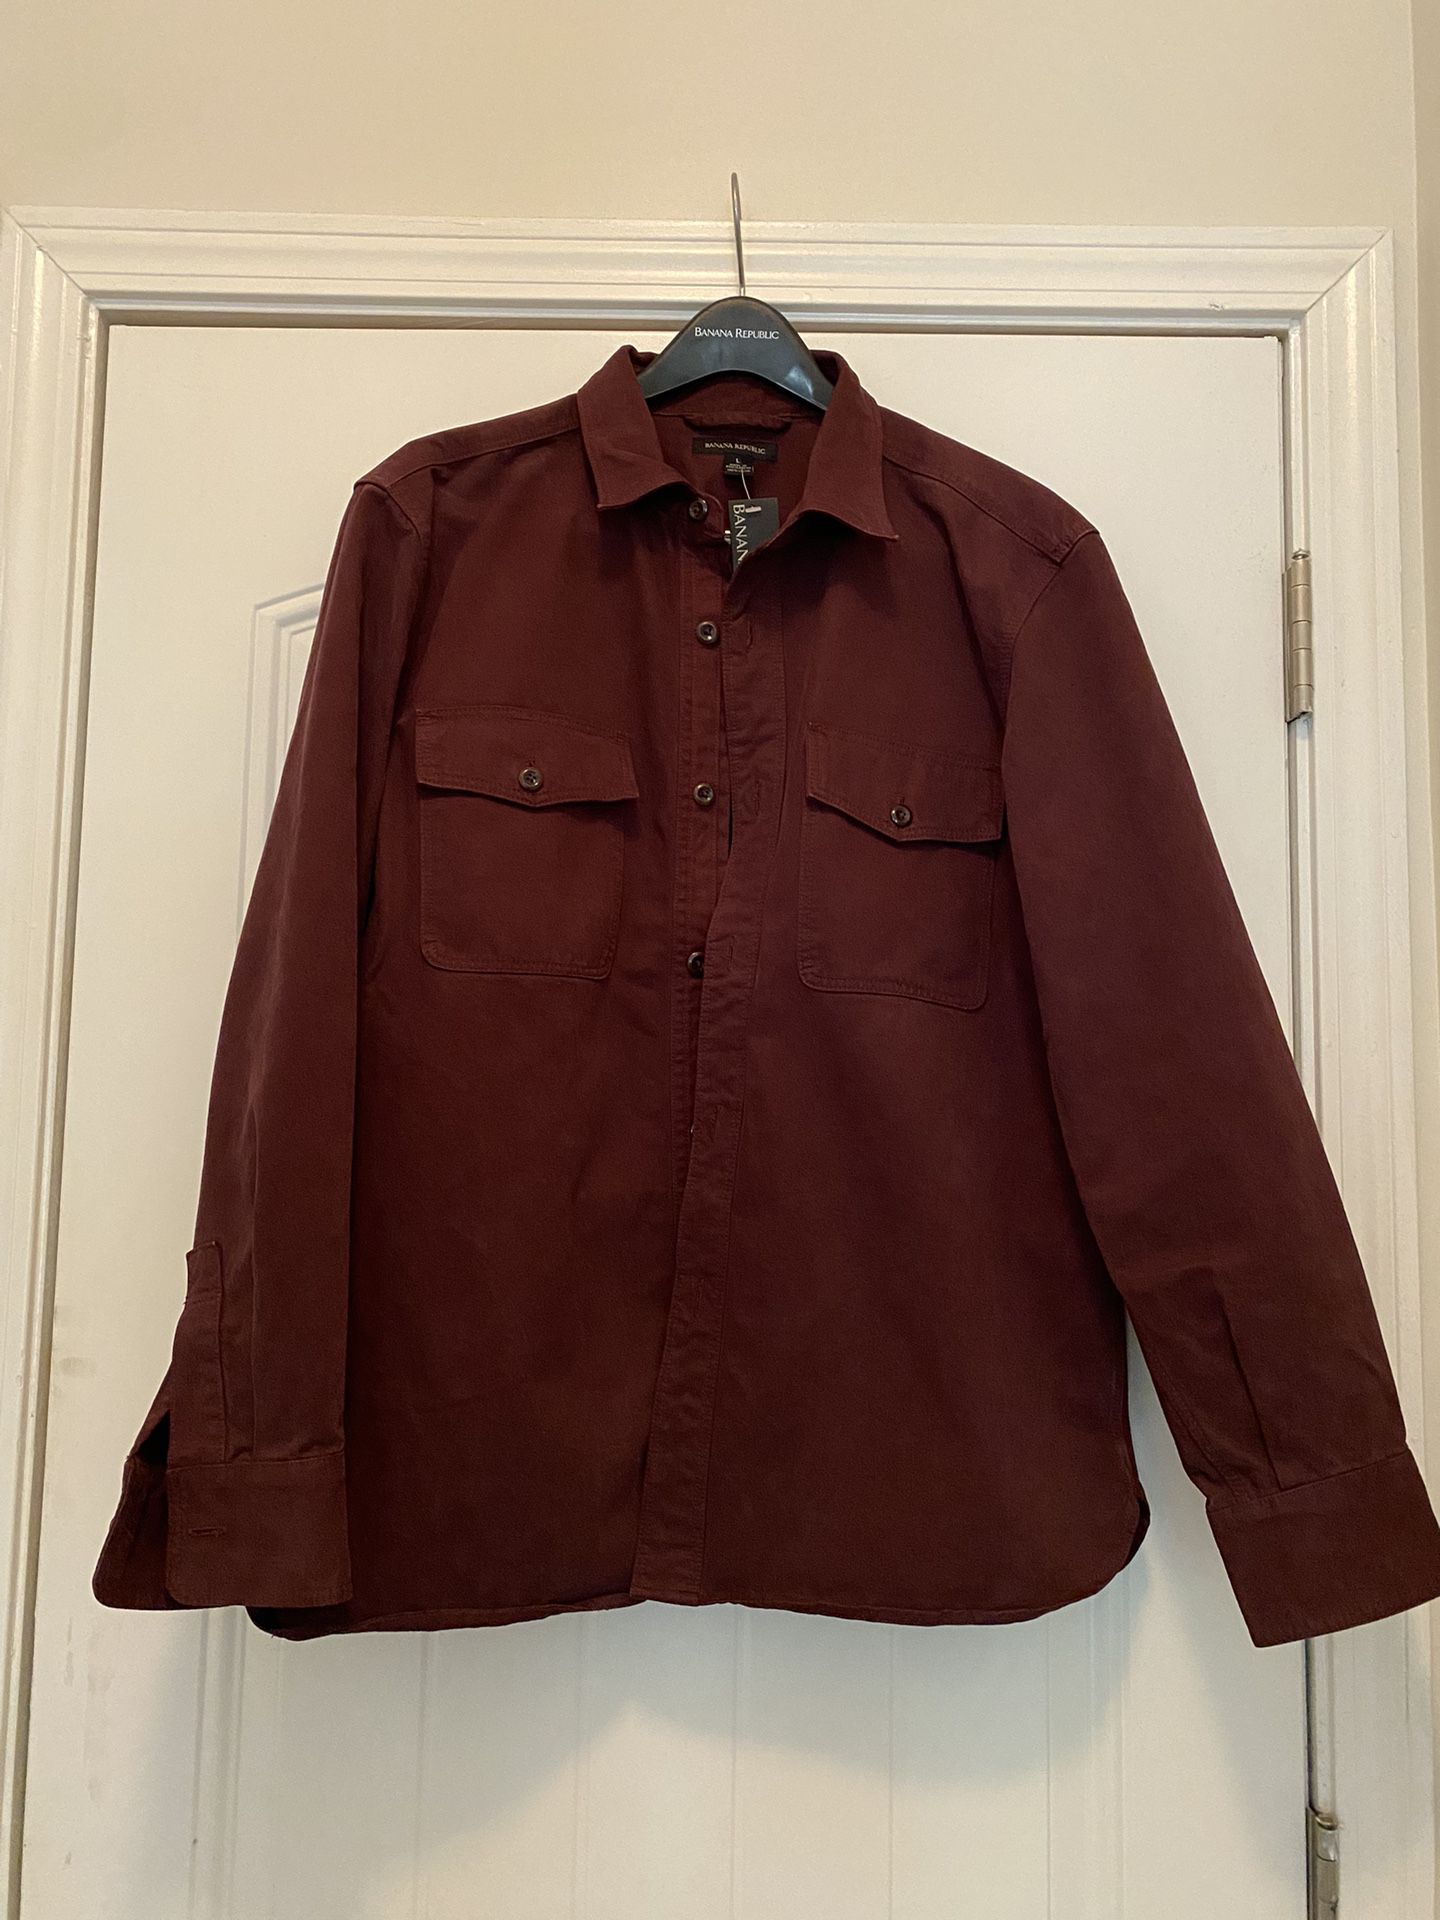 New! Banana Republic Men’s Burgundy Organic Cotton Shirt Jacket Shacket Large